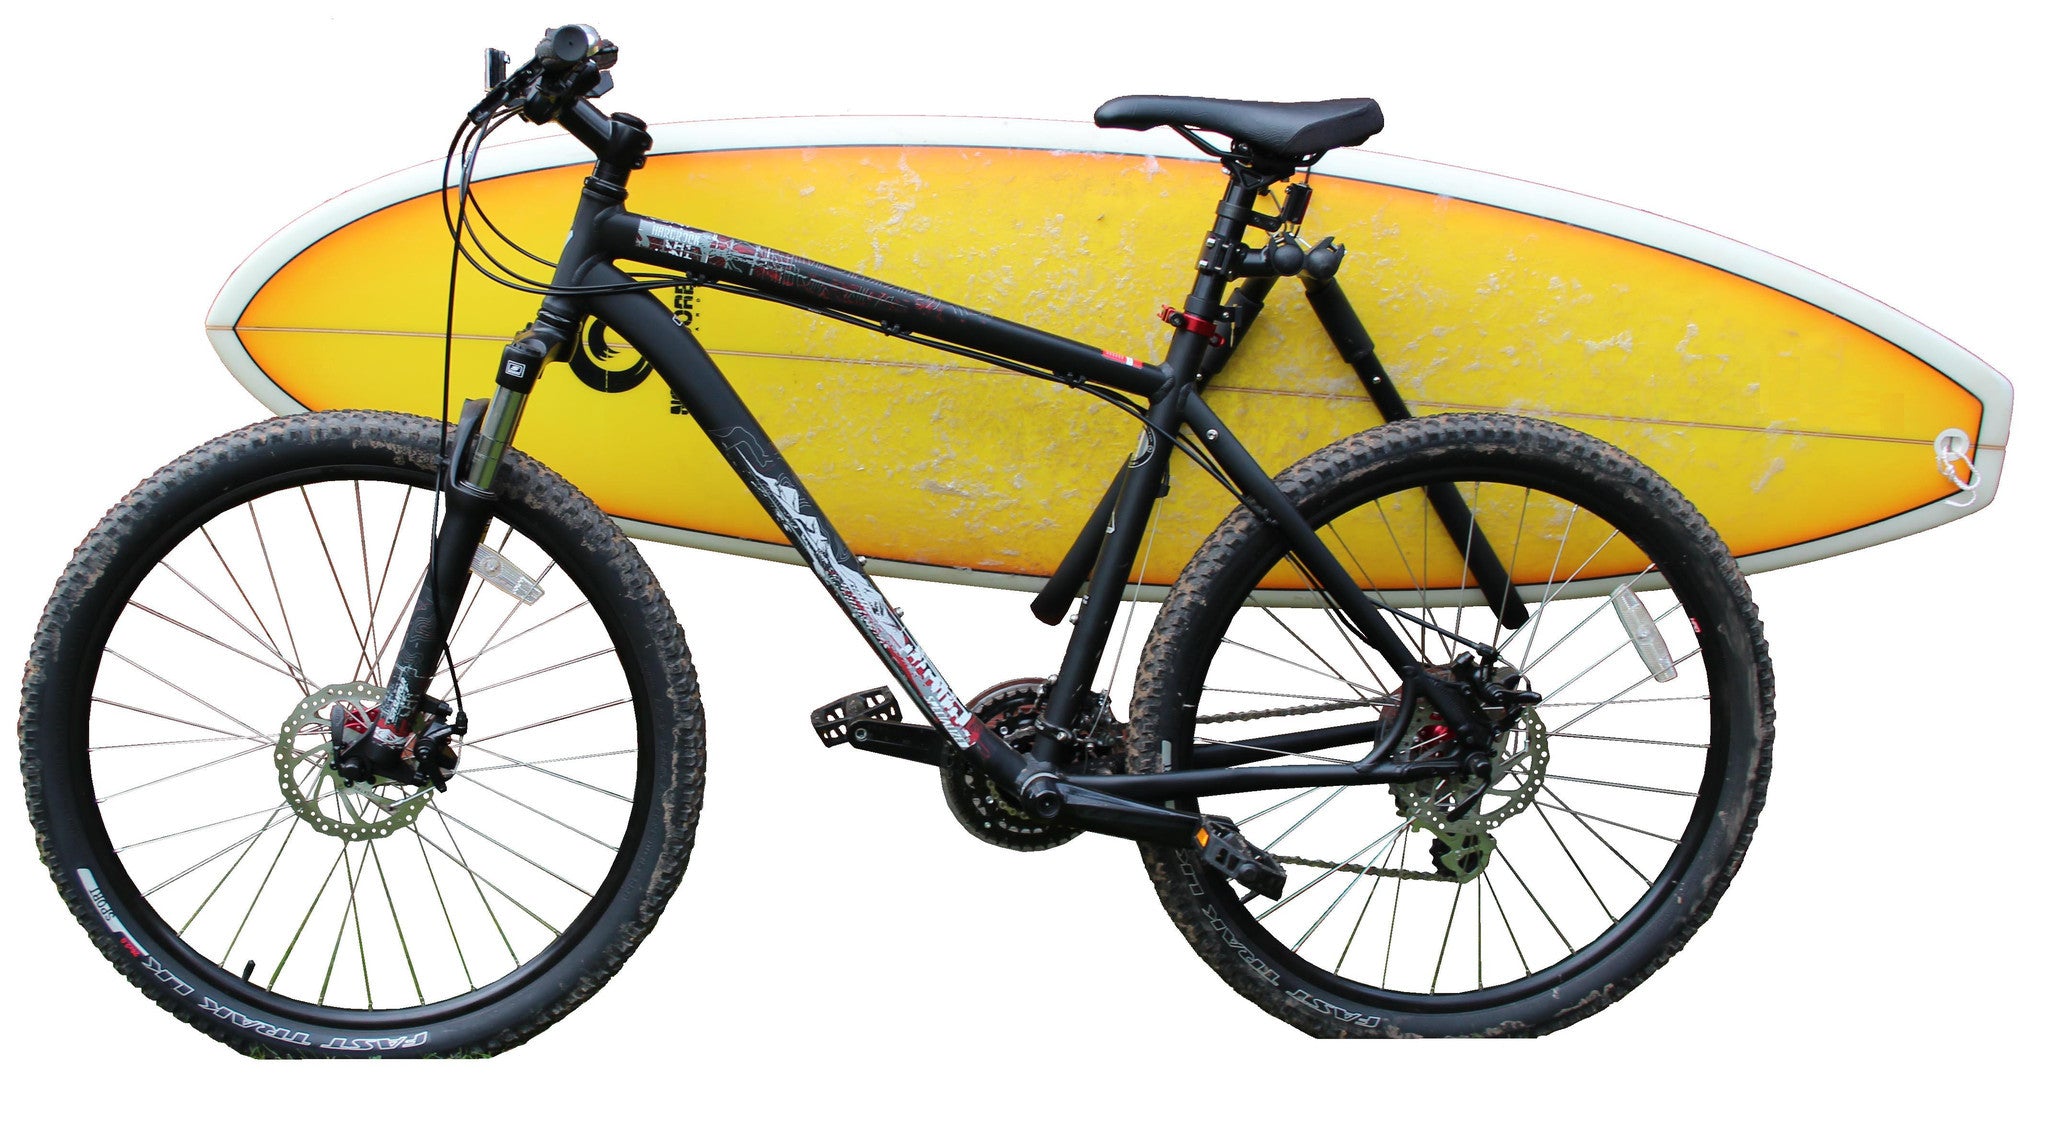 Surfboard Bike Bike Carrier Rack | Curve Surfboard Accessories - United States